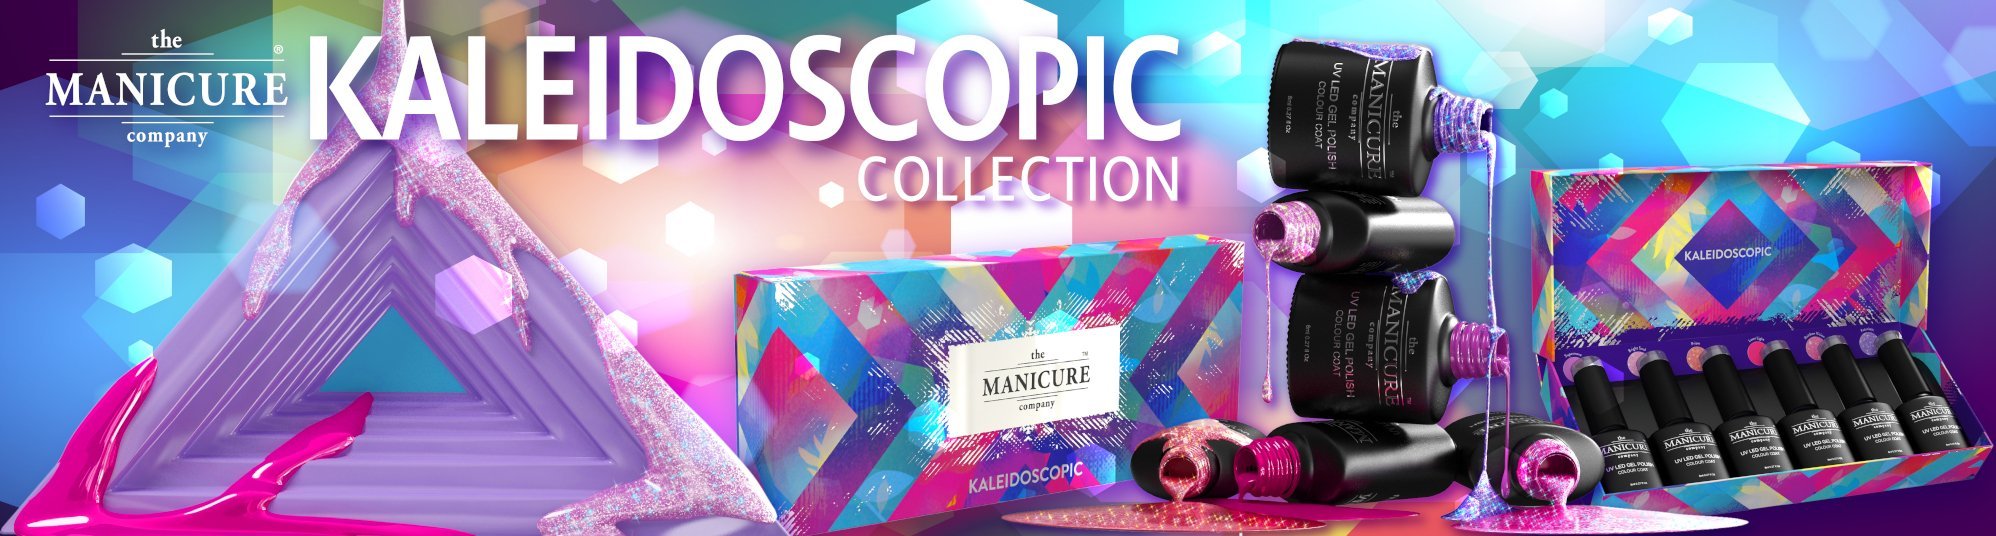 KALEIDOSCOPIC - The Manicure Company